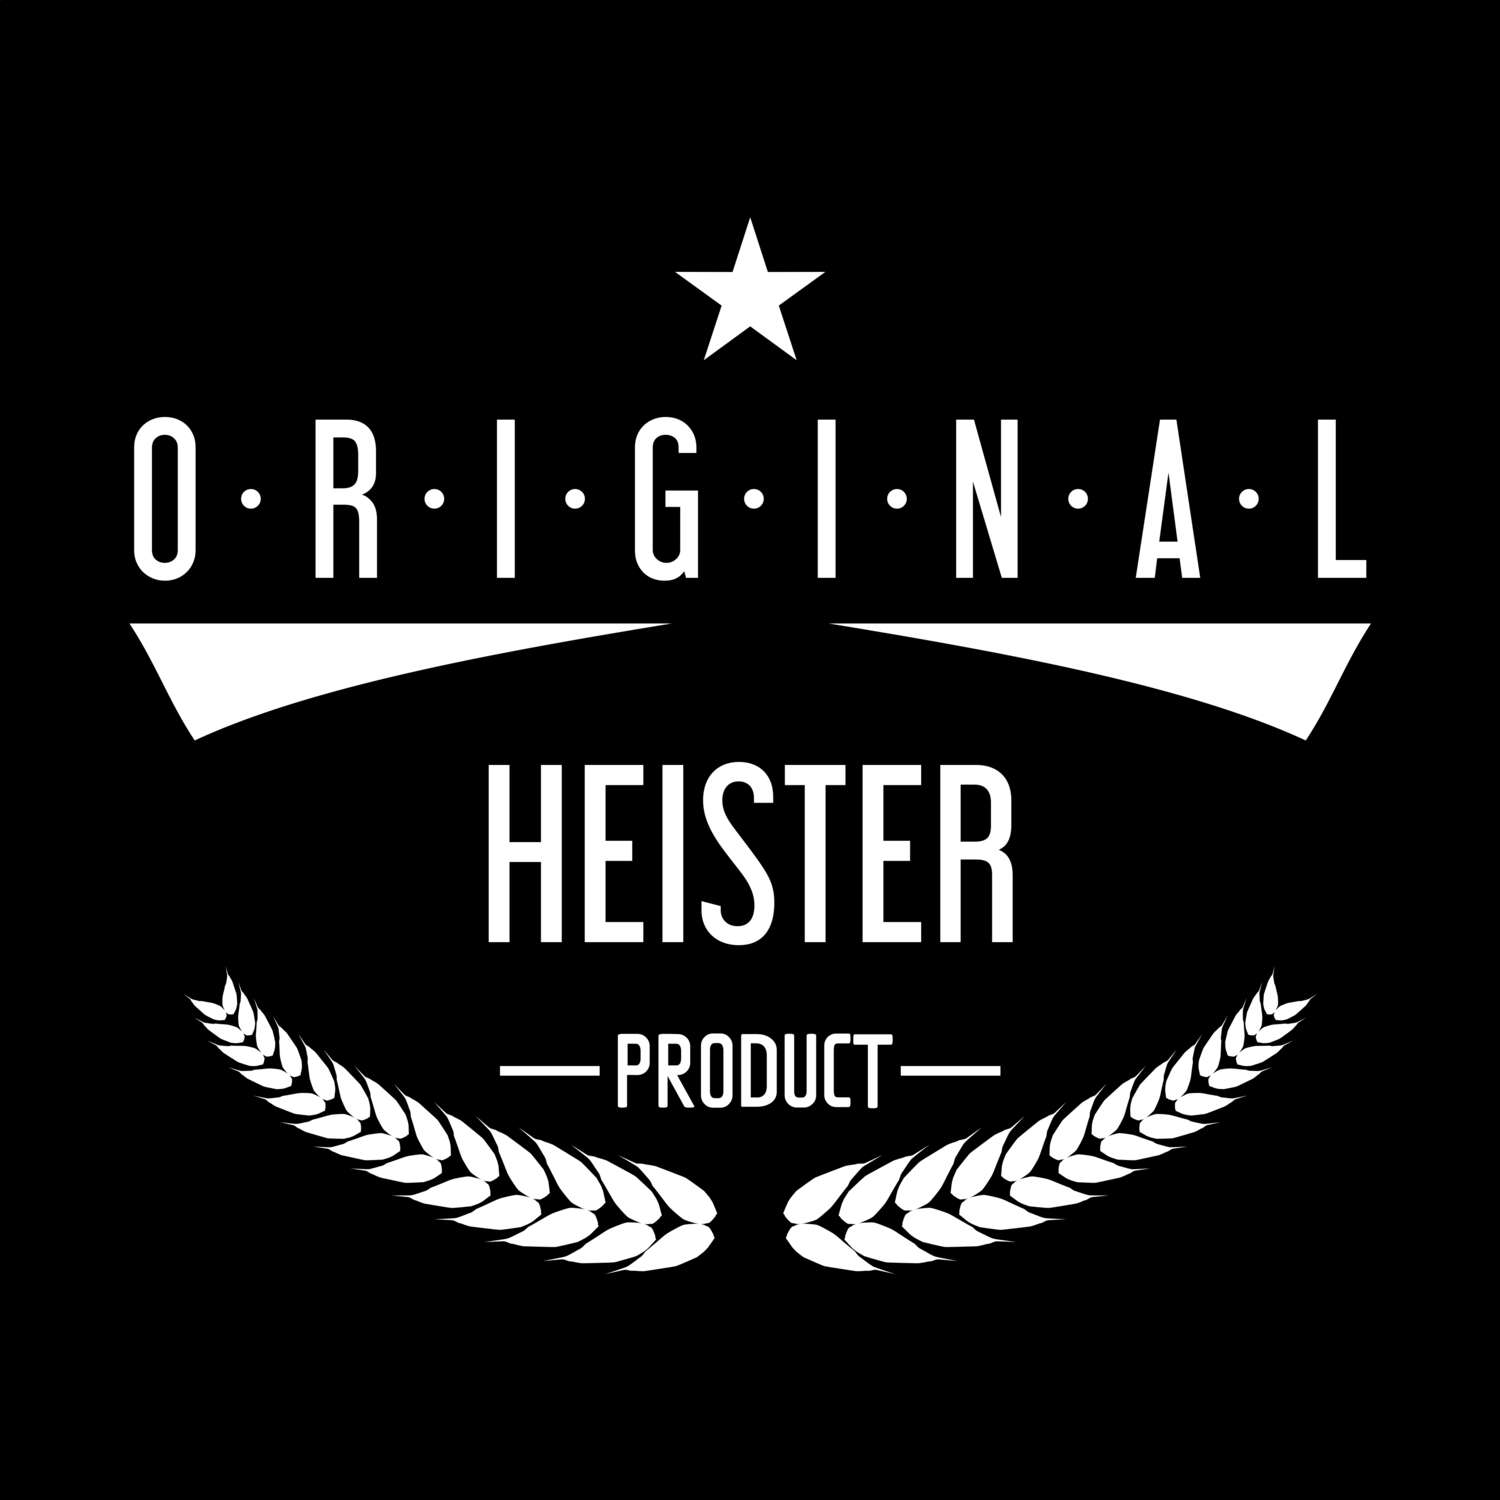 Heister T-Shirt »Original Product«